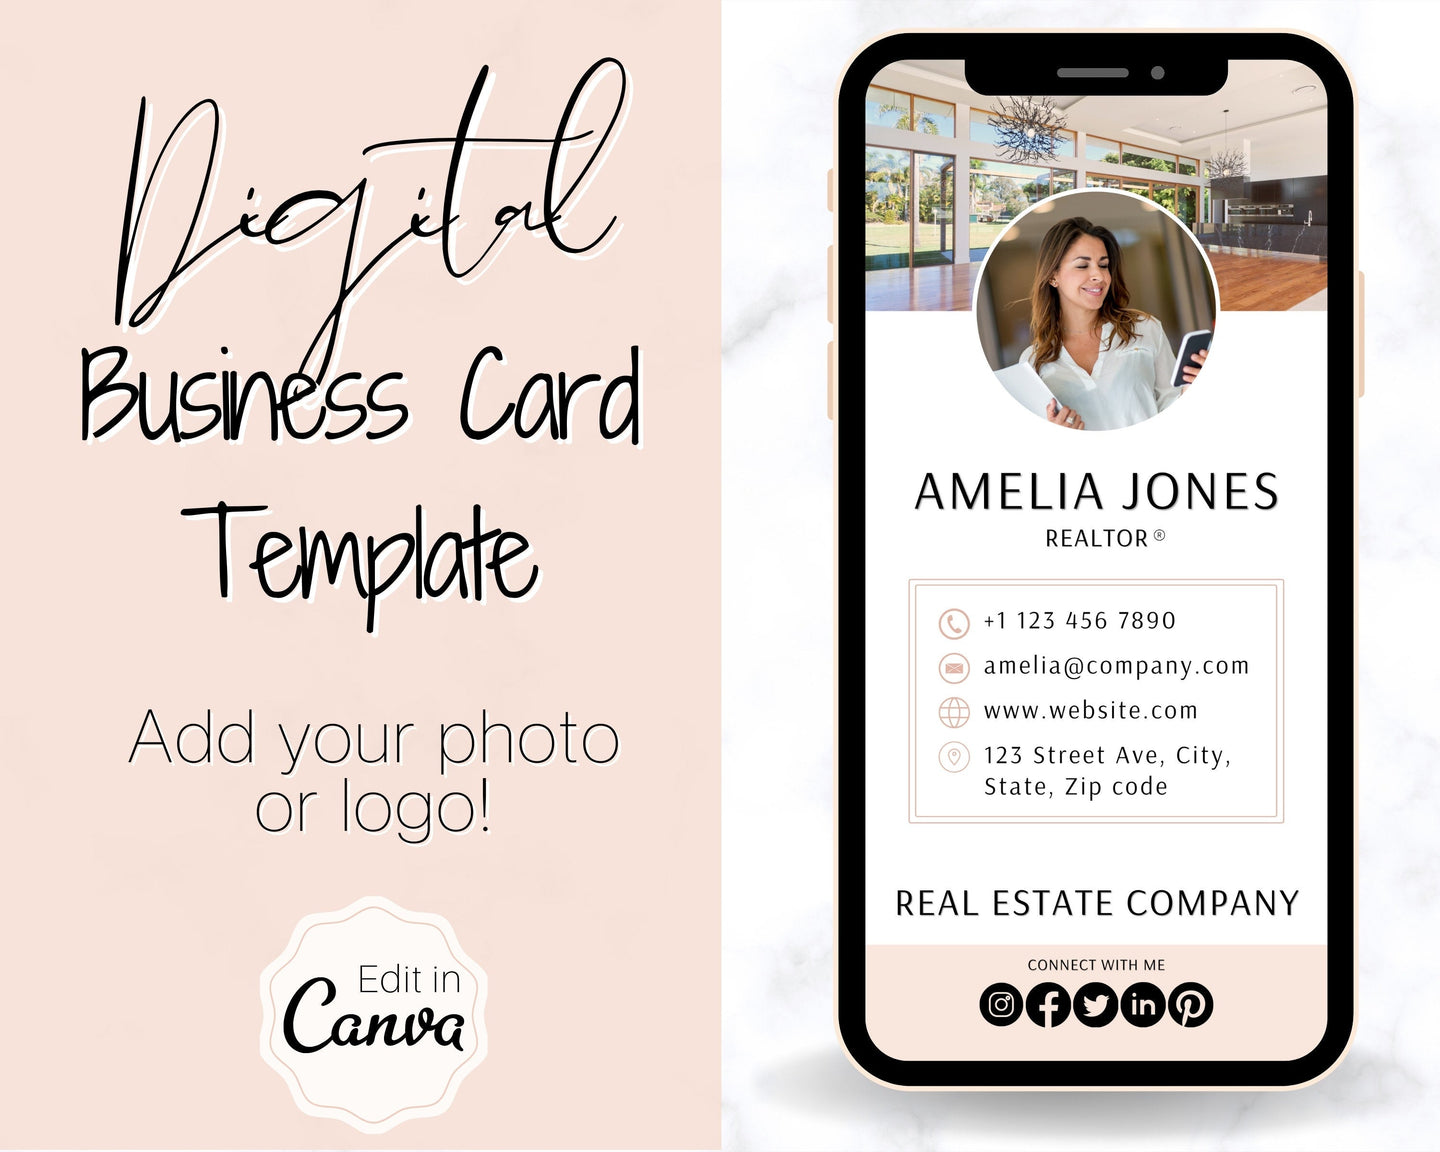 Digital Business Card Template. DIY add logo & photo! Editable Canva Design. Modern, Realtor Marketing, Real Estate, Realty Professional | Pink Style 1